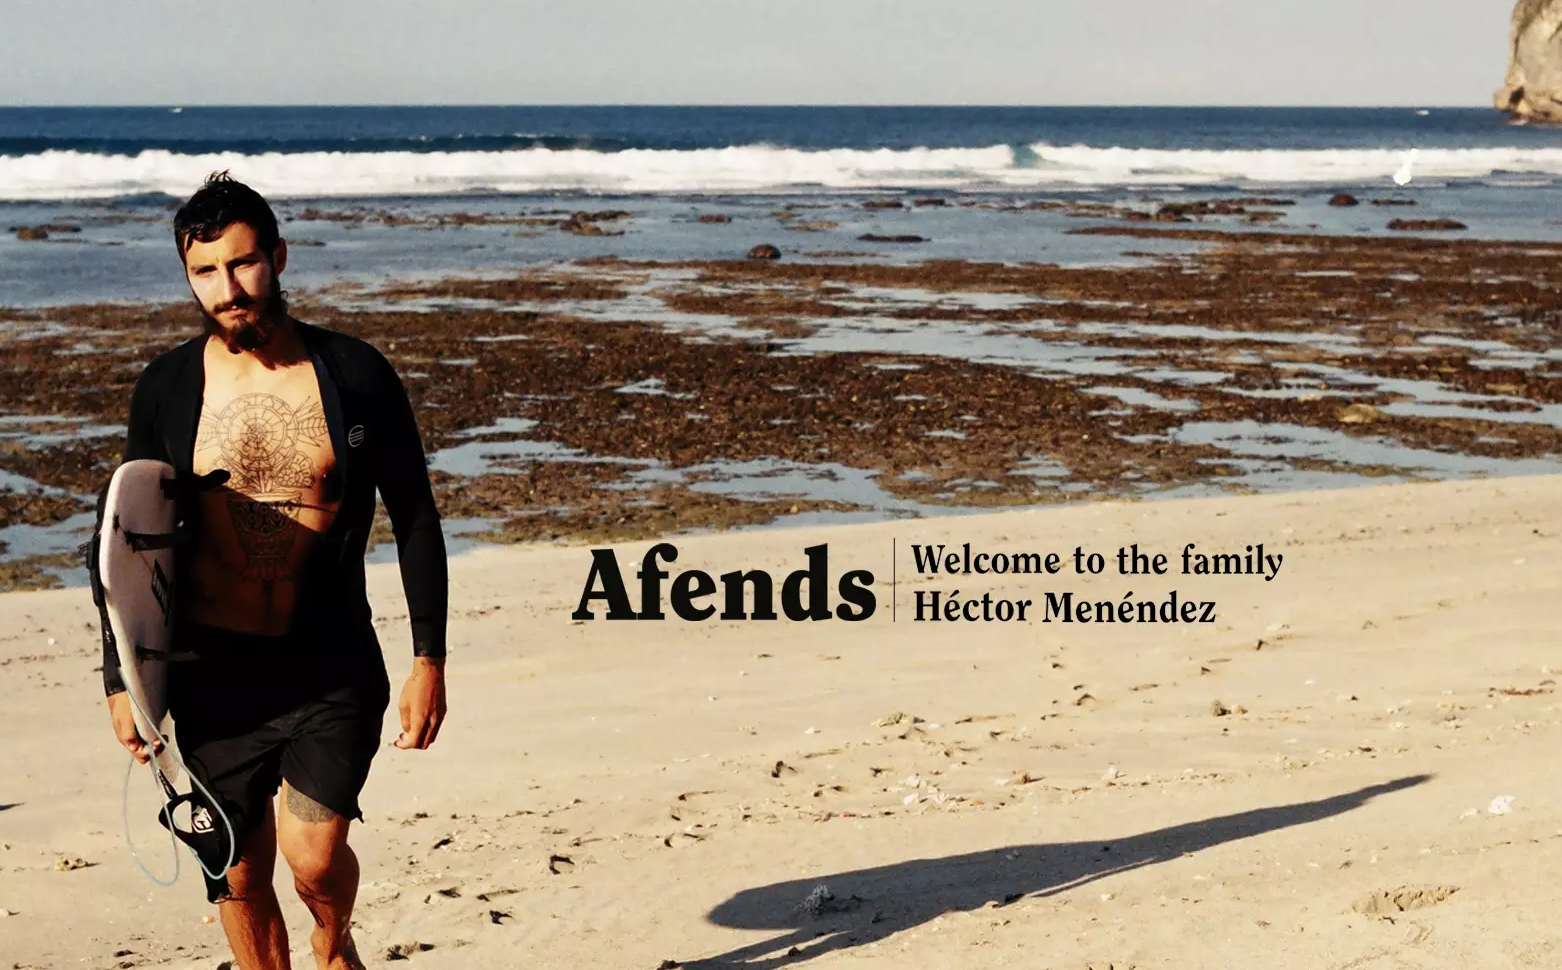 AFENDS welcomes Héctor Menéndez